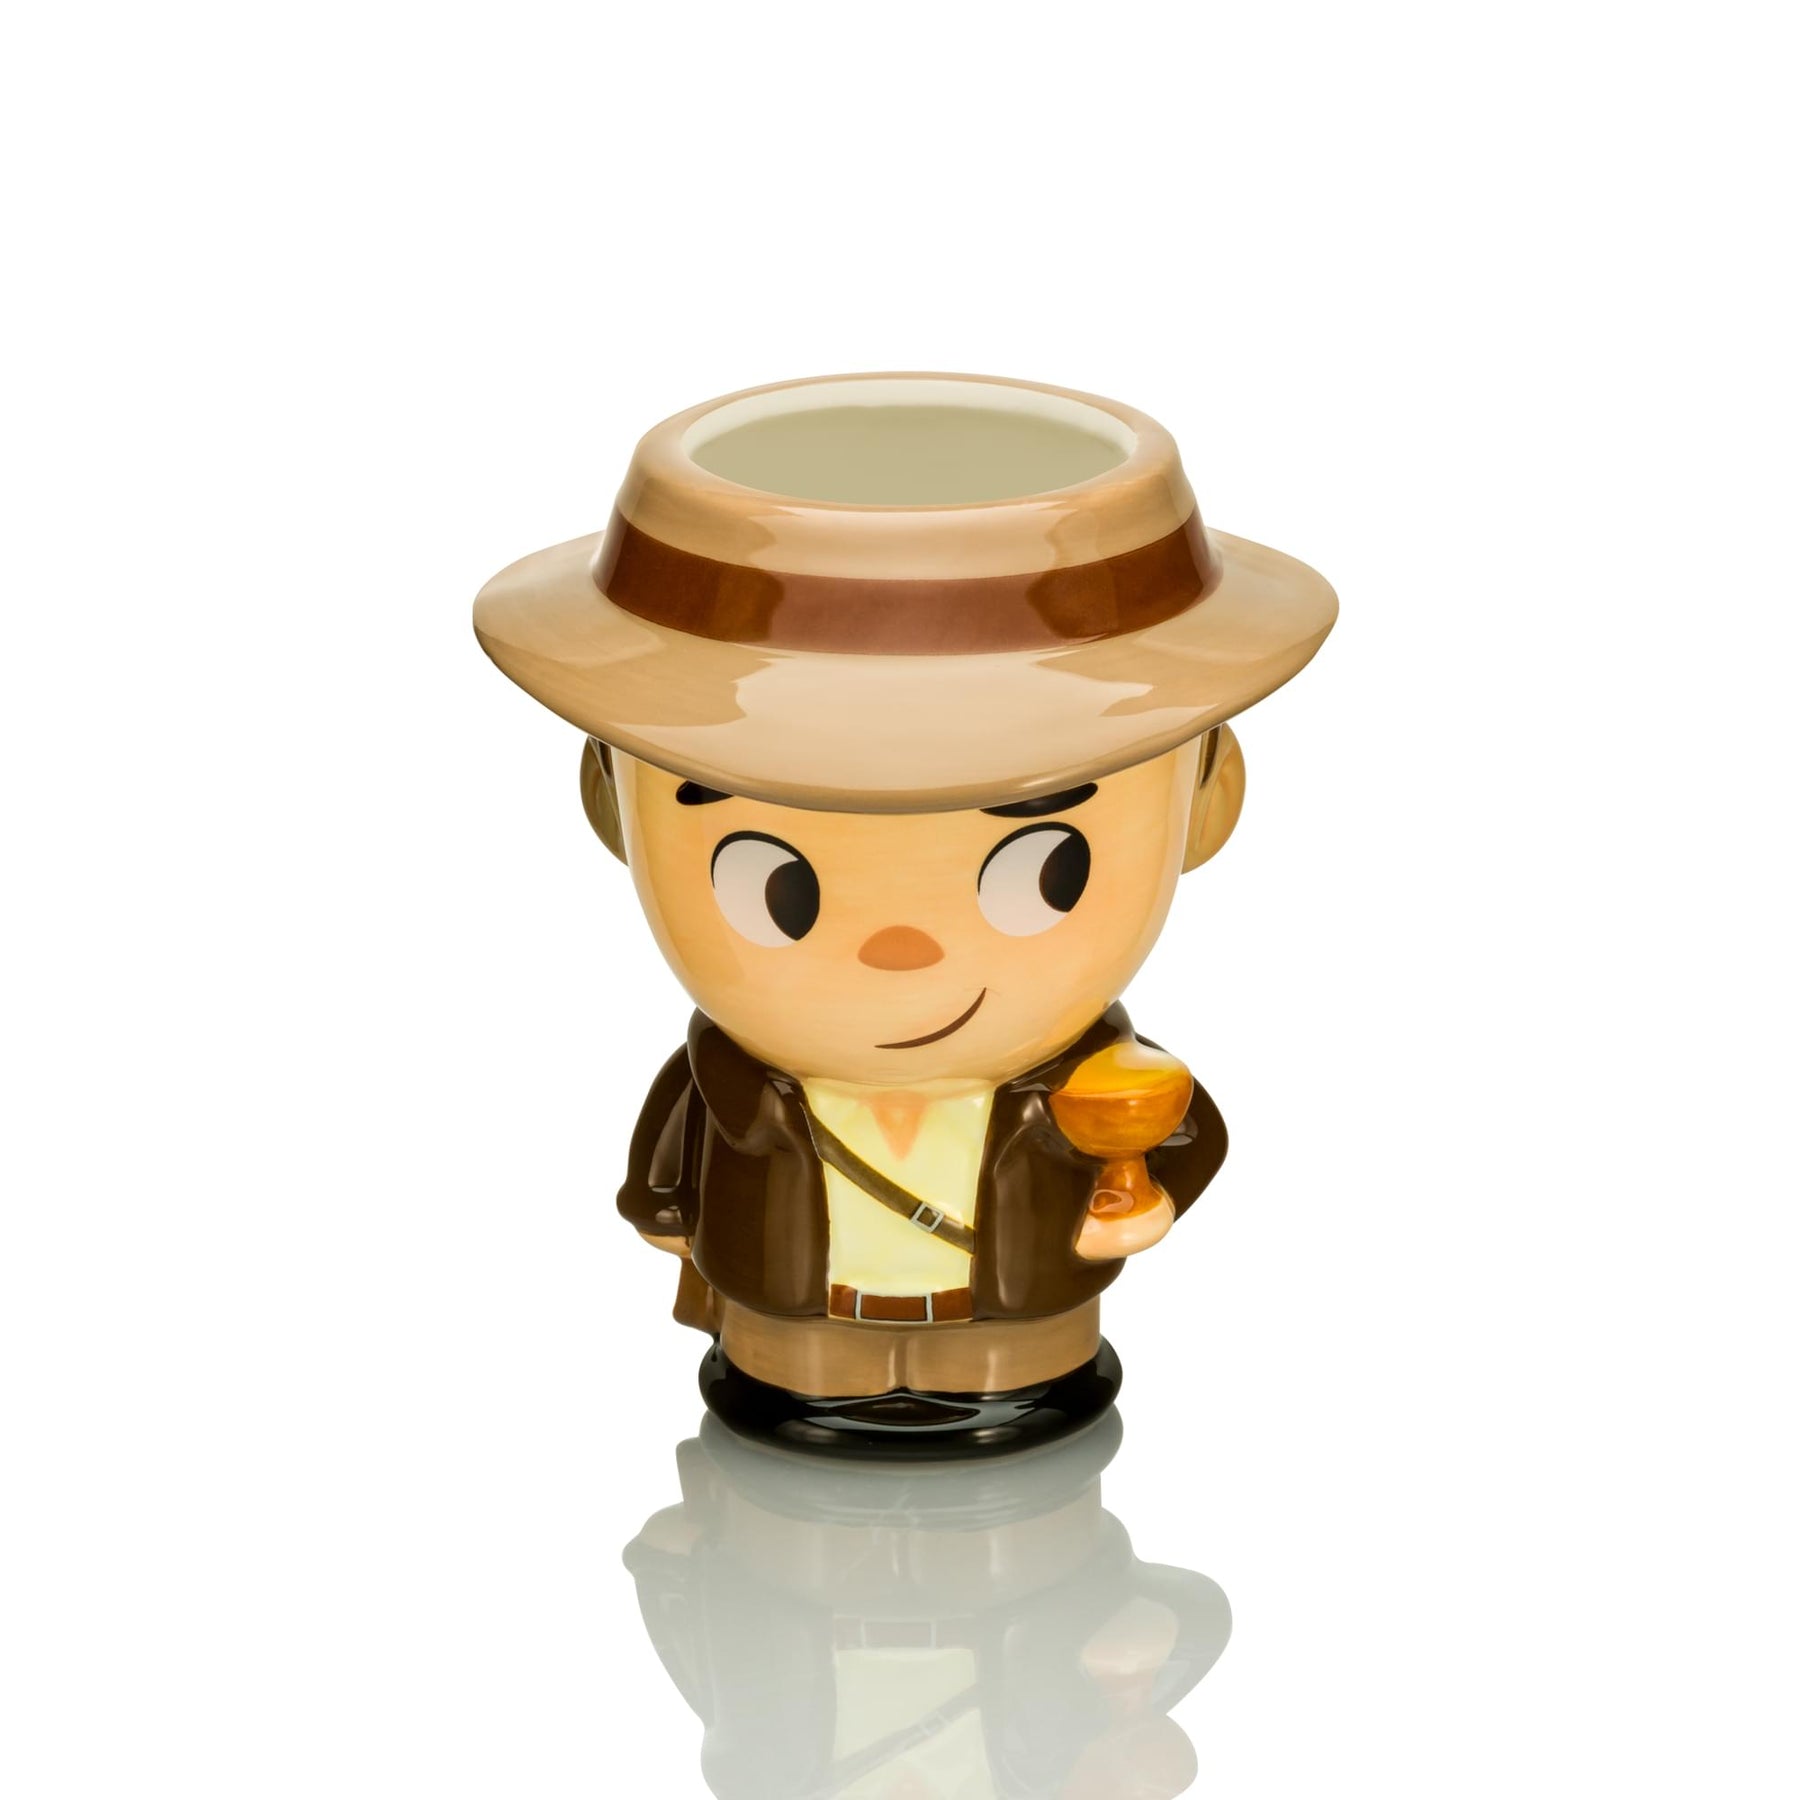 Indiana Jones & Henry Jones Limited Edition 20oz Cupful of Cute Mug Set